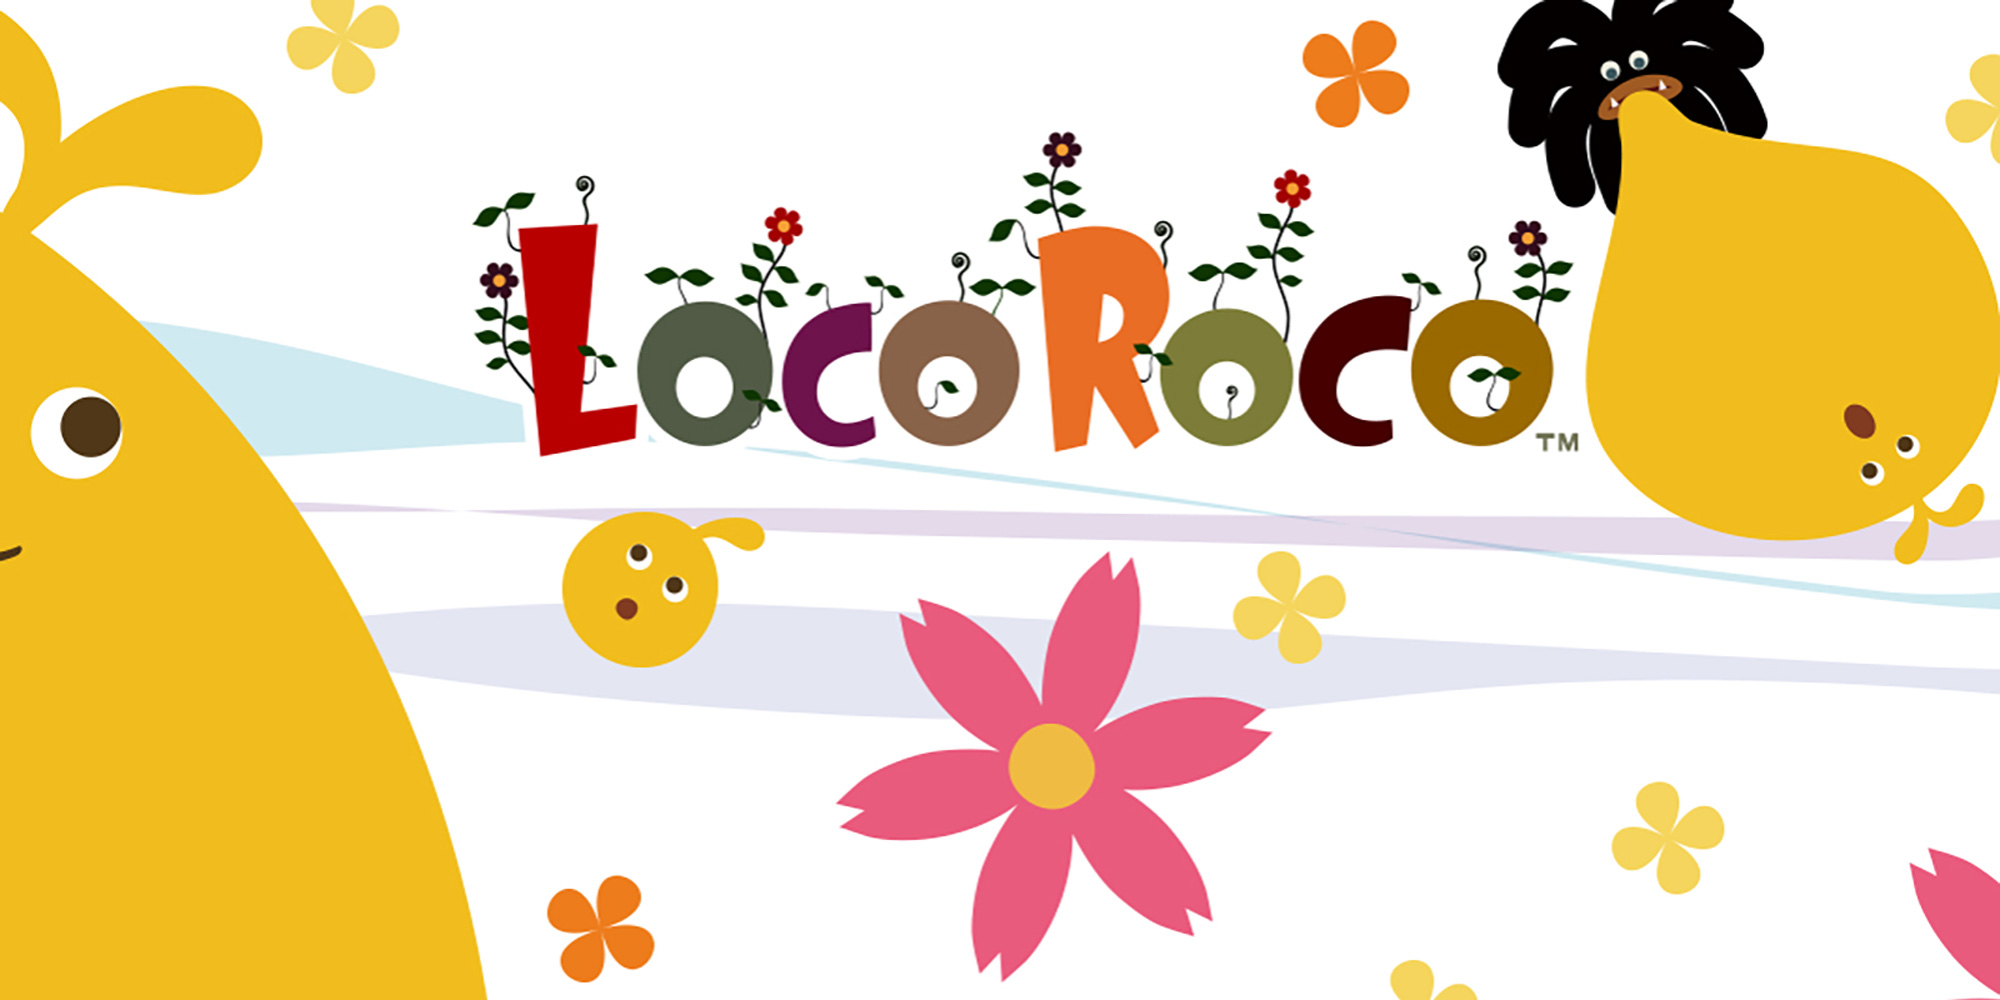  LocoRoco Remastered : « Bajumbo moi noi noi jecker »